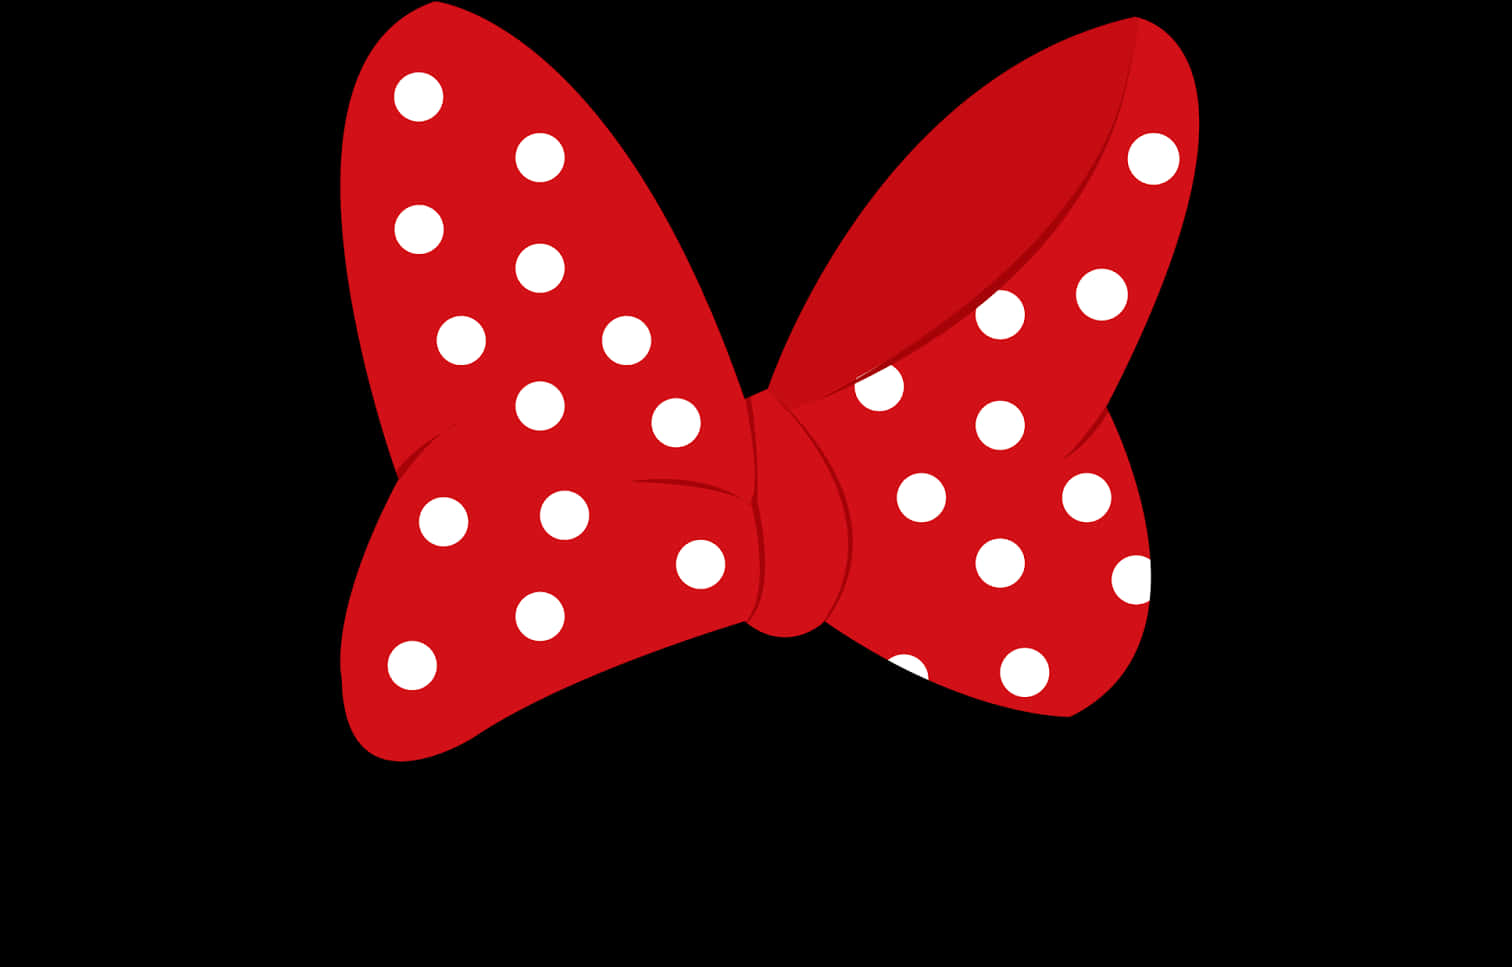 Red Polka Dot Bow Illustration